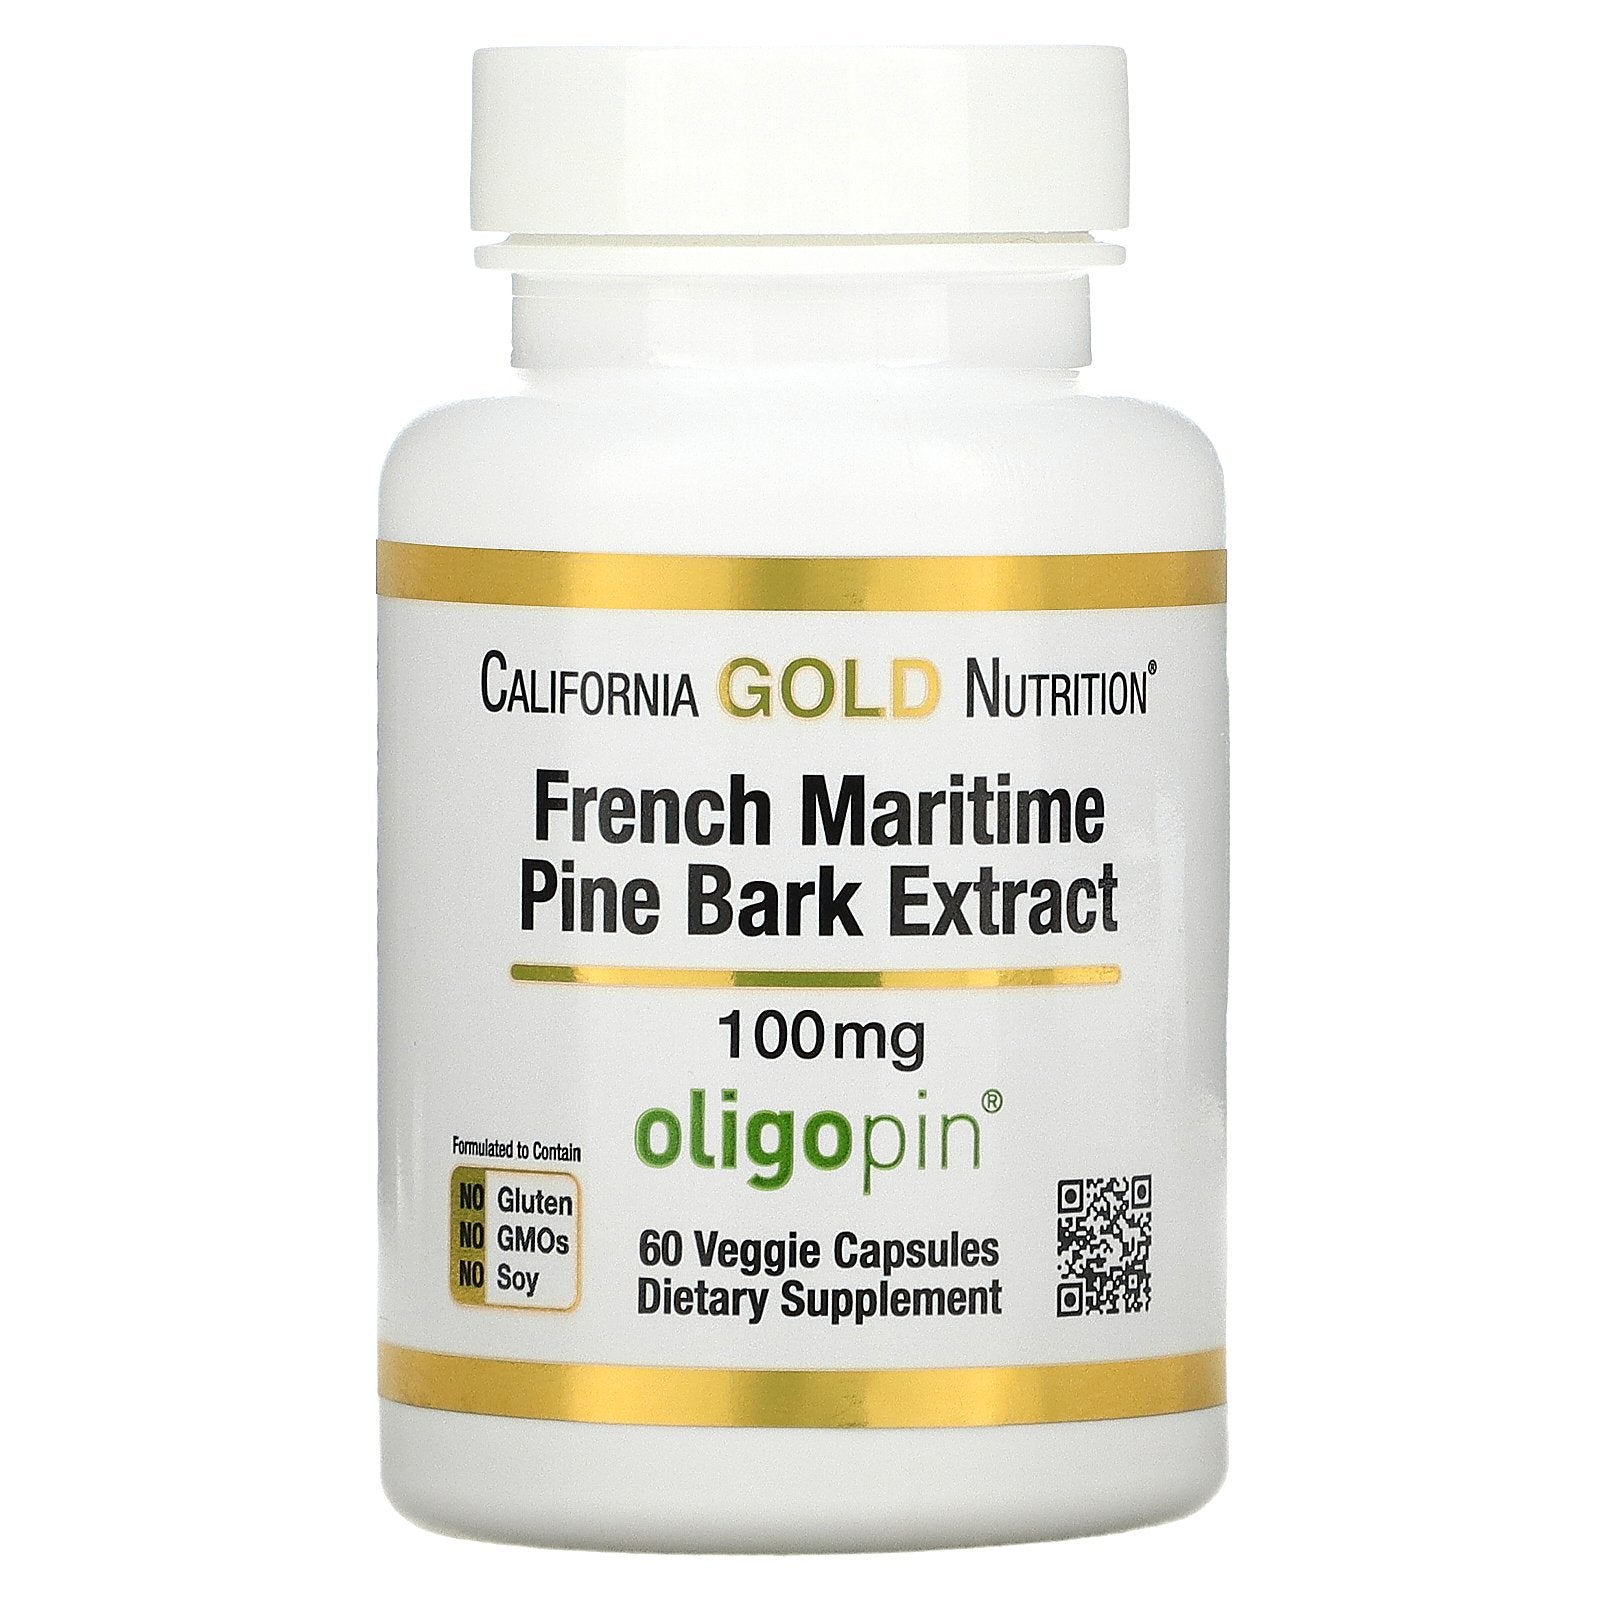 California Gold Nutrition, French Maritime Pine Bark Extract, Oligopin, 100 mg,Veggie Capsules